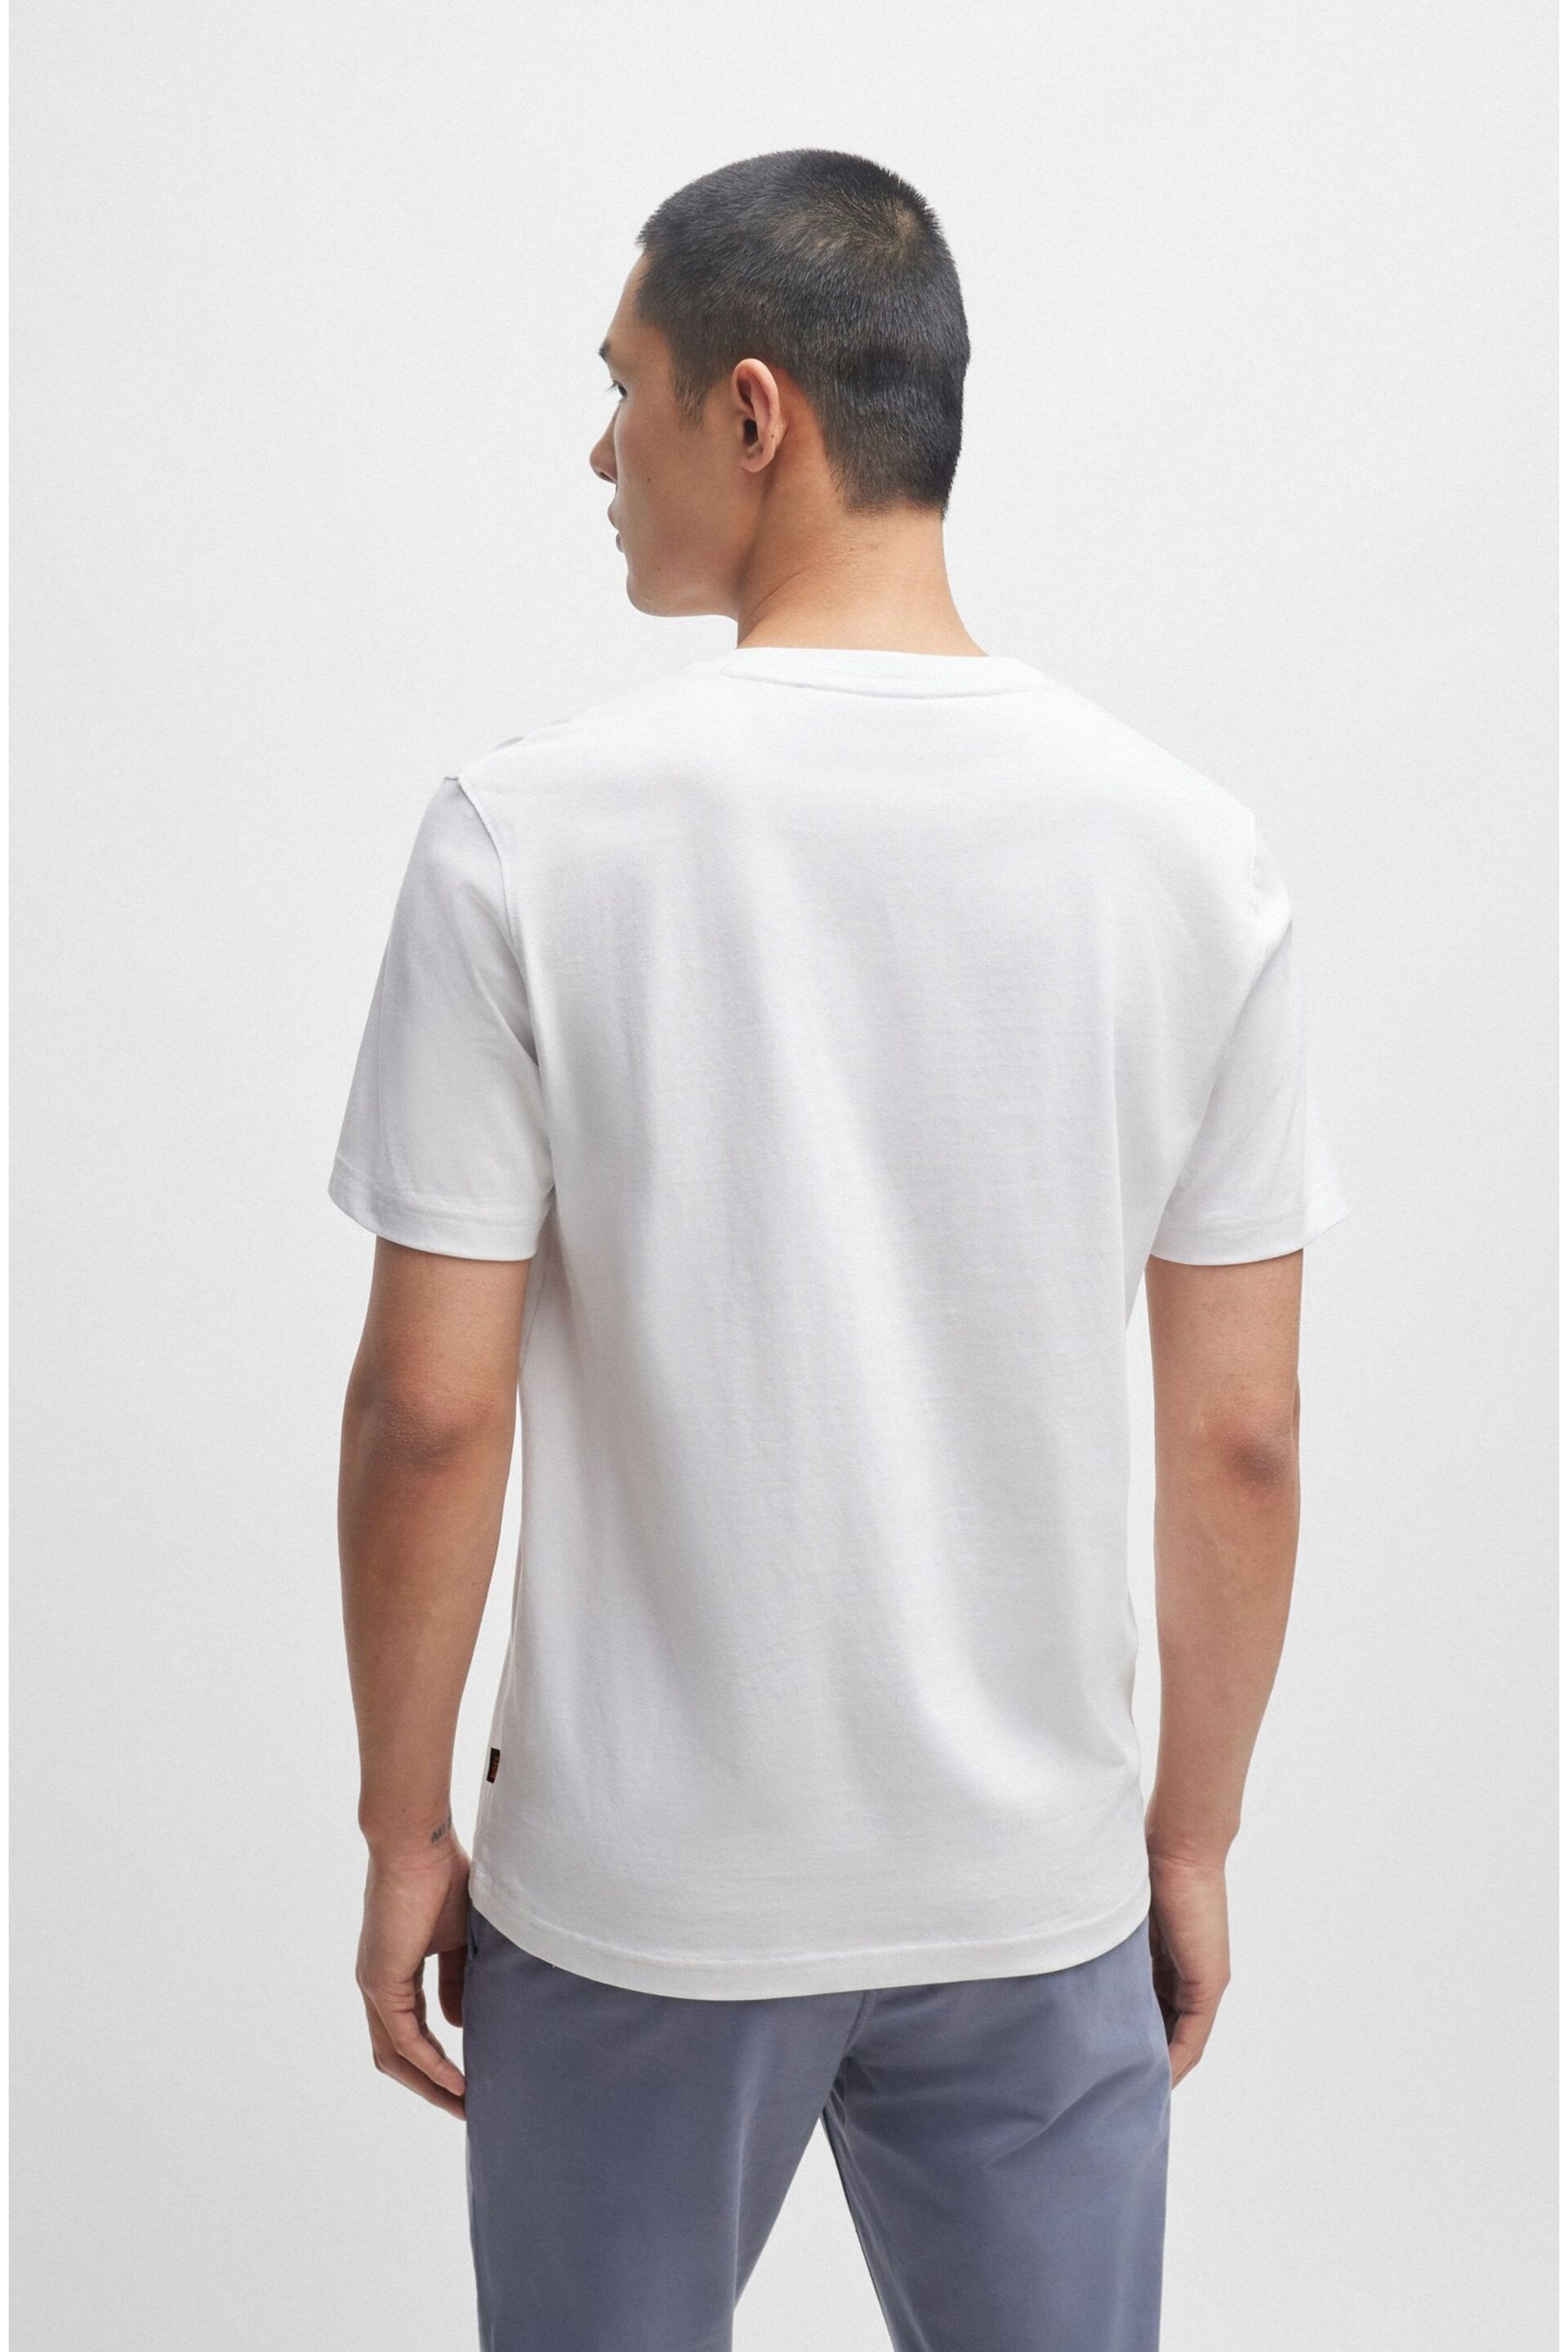 BOSS White/Blue Cotton-Jersey Regular-Fit T-Shirt With Seasonal Artwork - Image 2 of 5